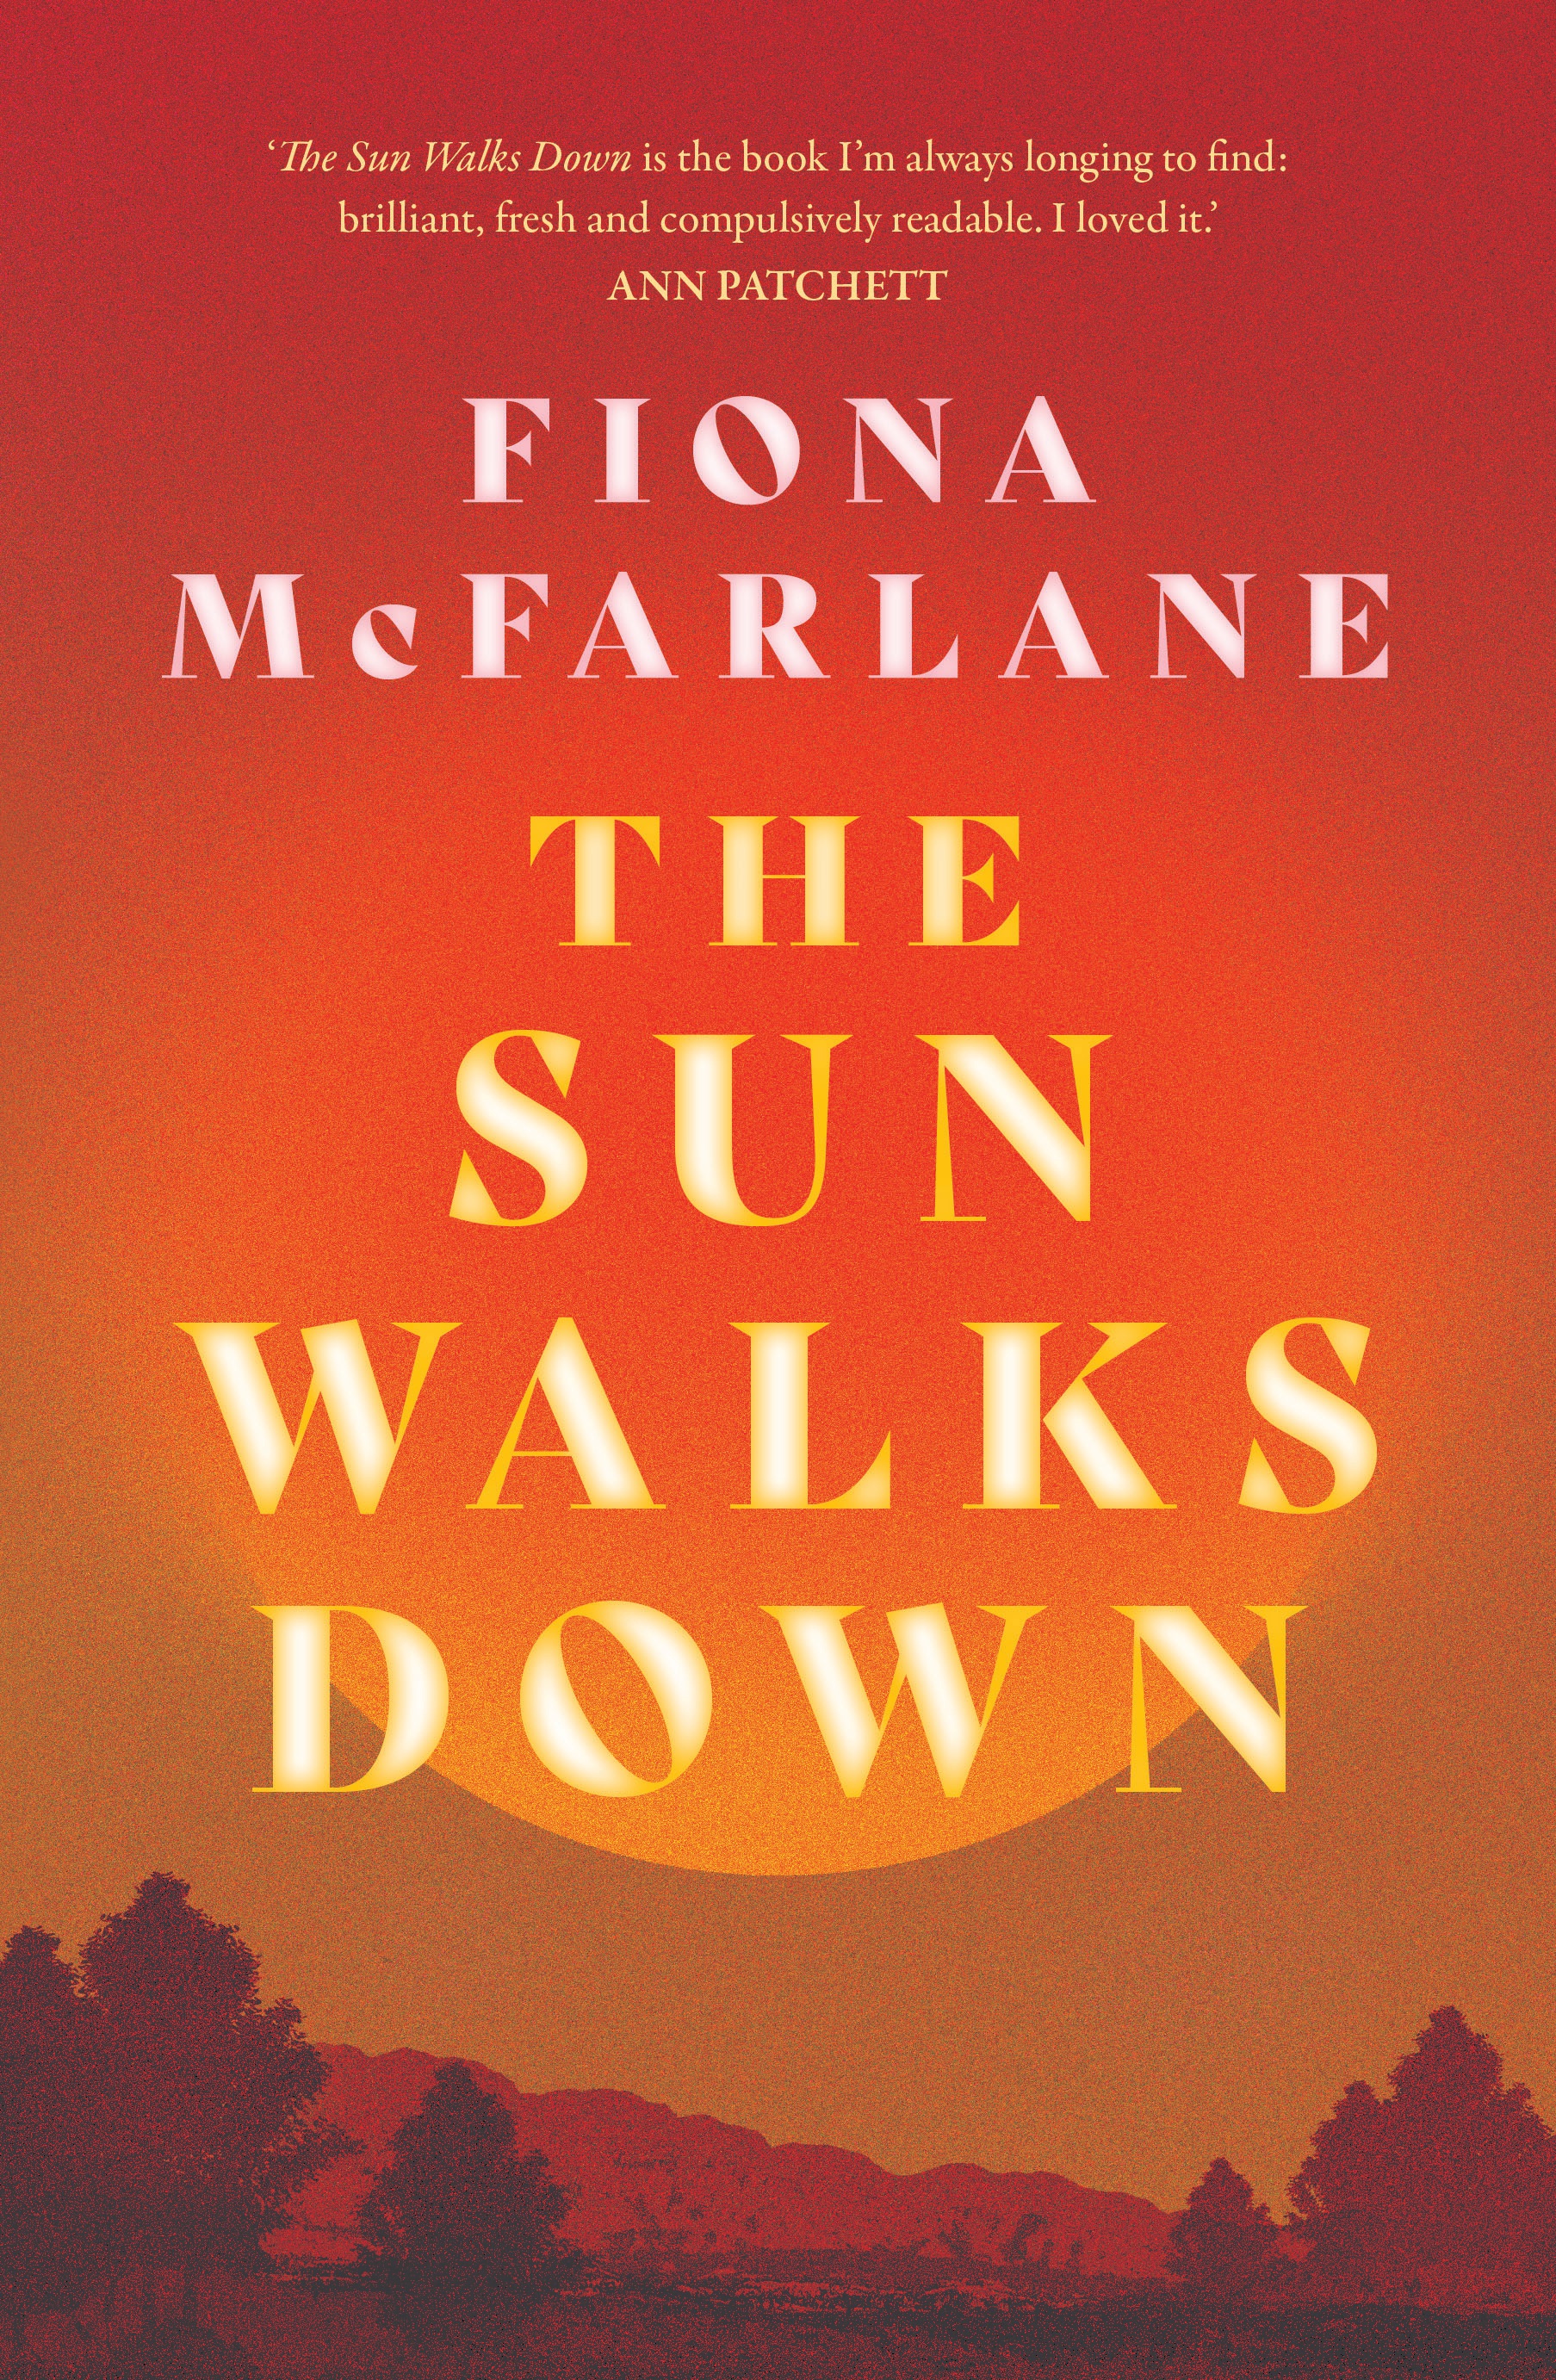 The Sun Walks Down by Fiona McFarlane